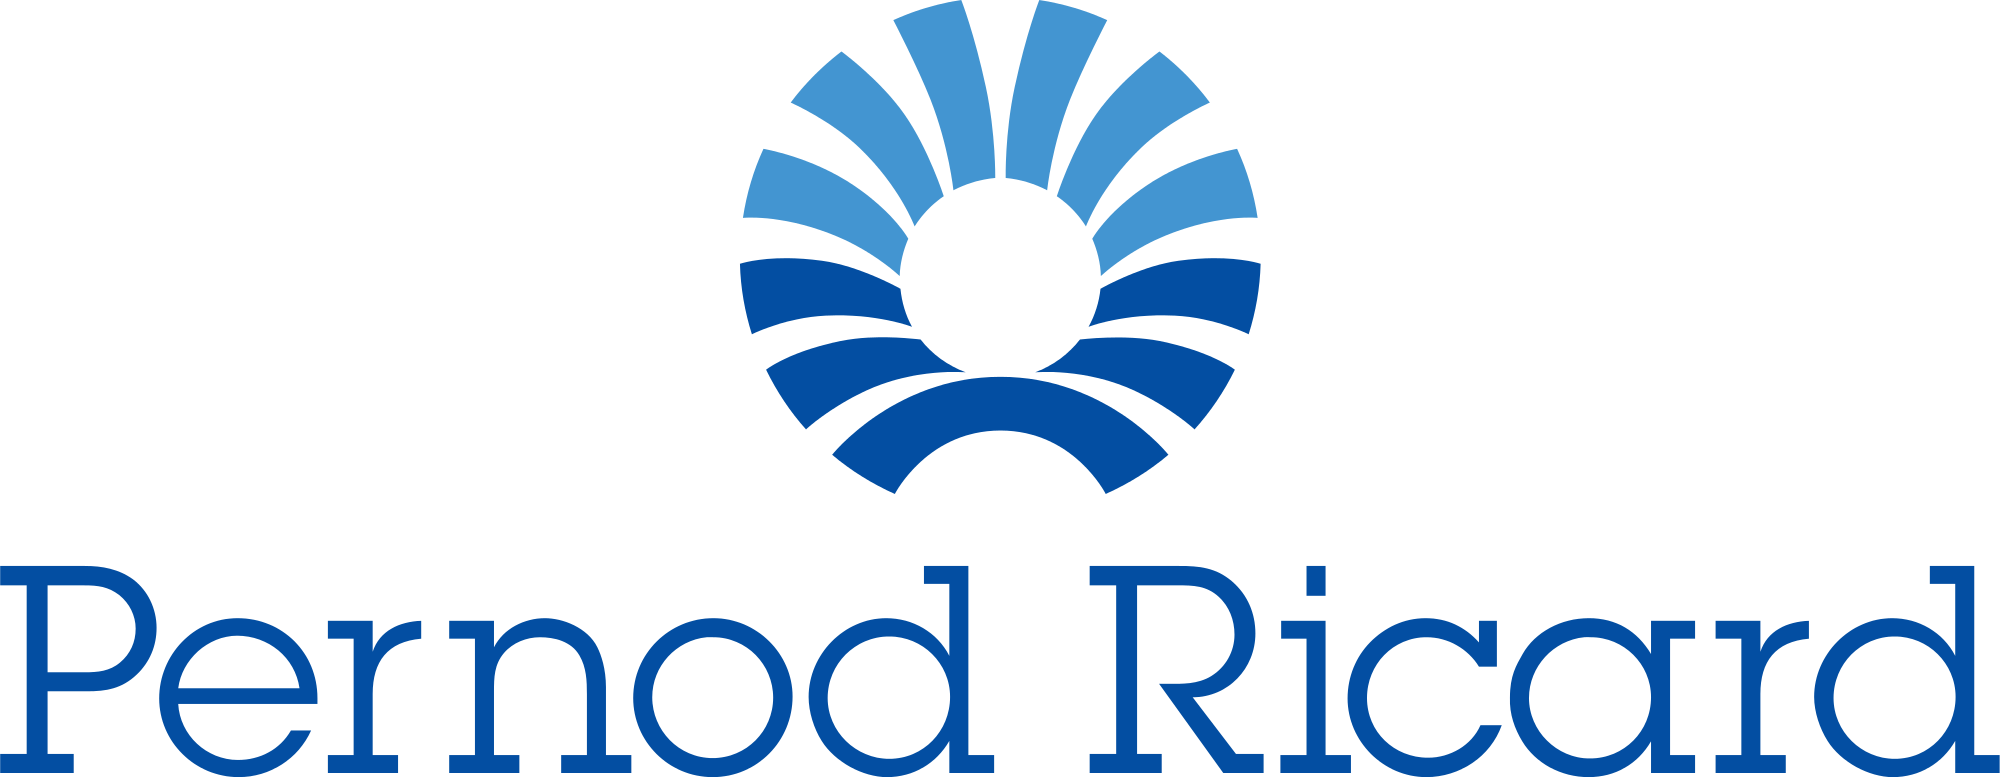 Pernod_Ricard_logo.svg